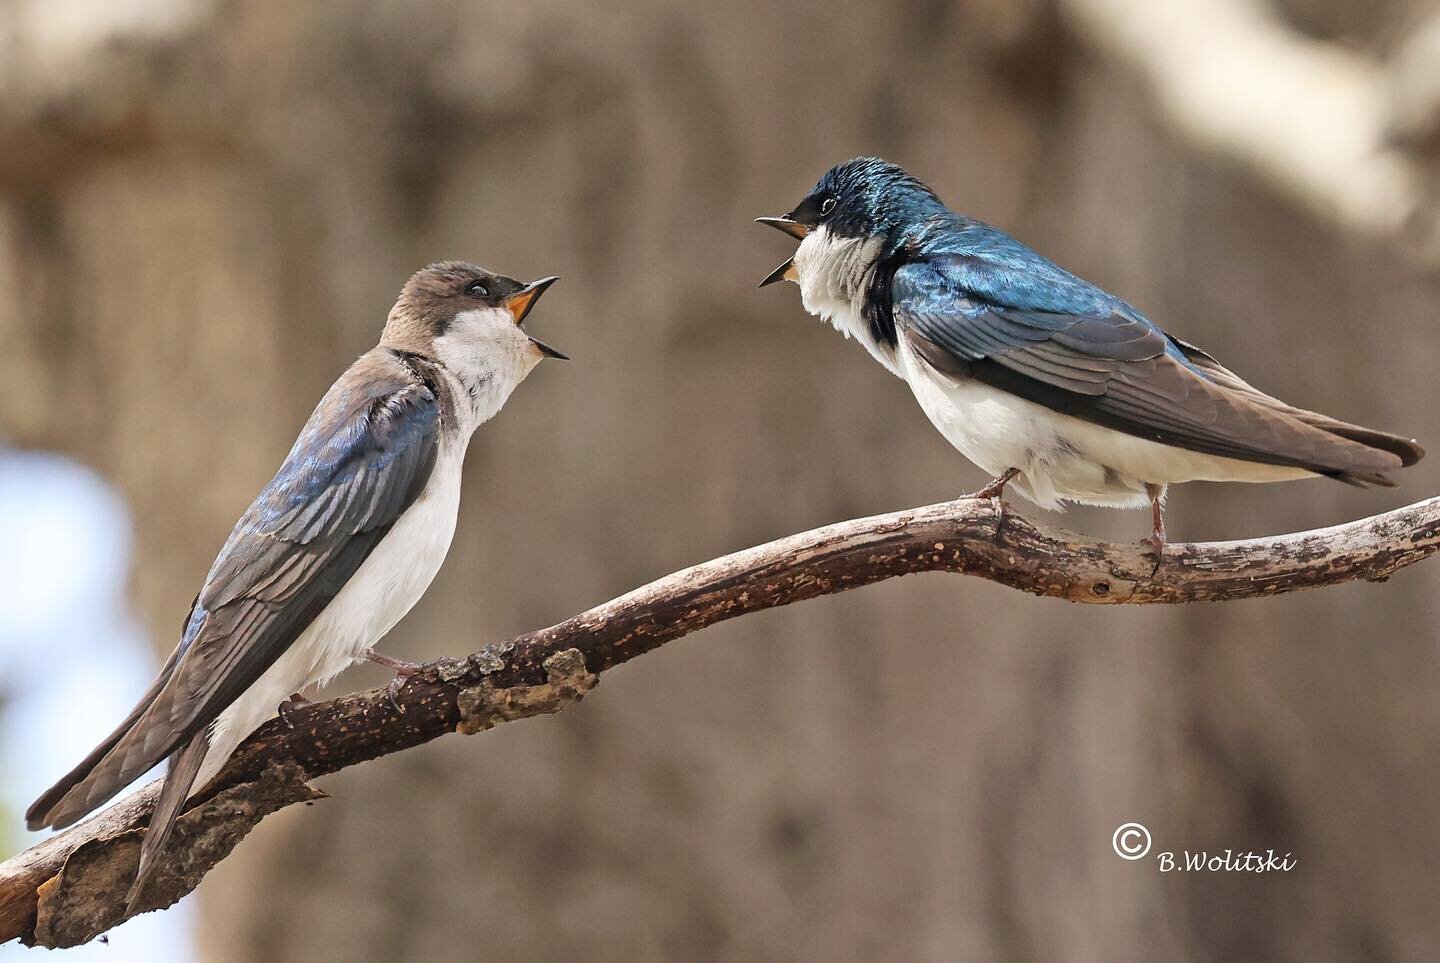 &lsquo; Swallow Squabble &lsquo;_Tree Swallow pair in bird talk sorting out some disagreement during nesting season. #swallows #treeswallow #birdtalk #treeswallow #sharecangeo#natgeowildlife#best_birds_of_world#best_birds_planet#sassy_birds#bird_love